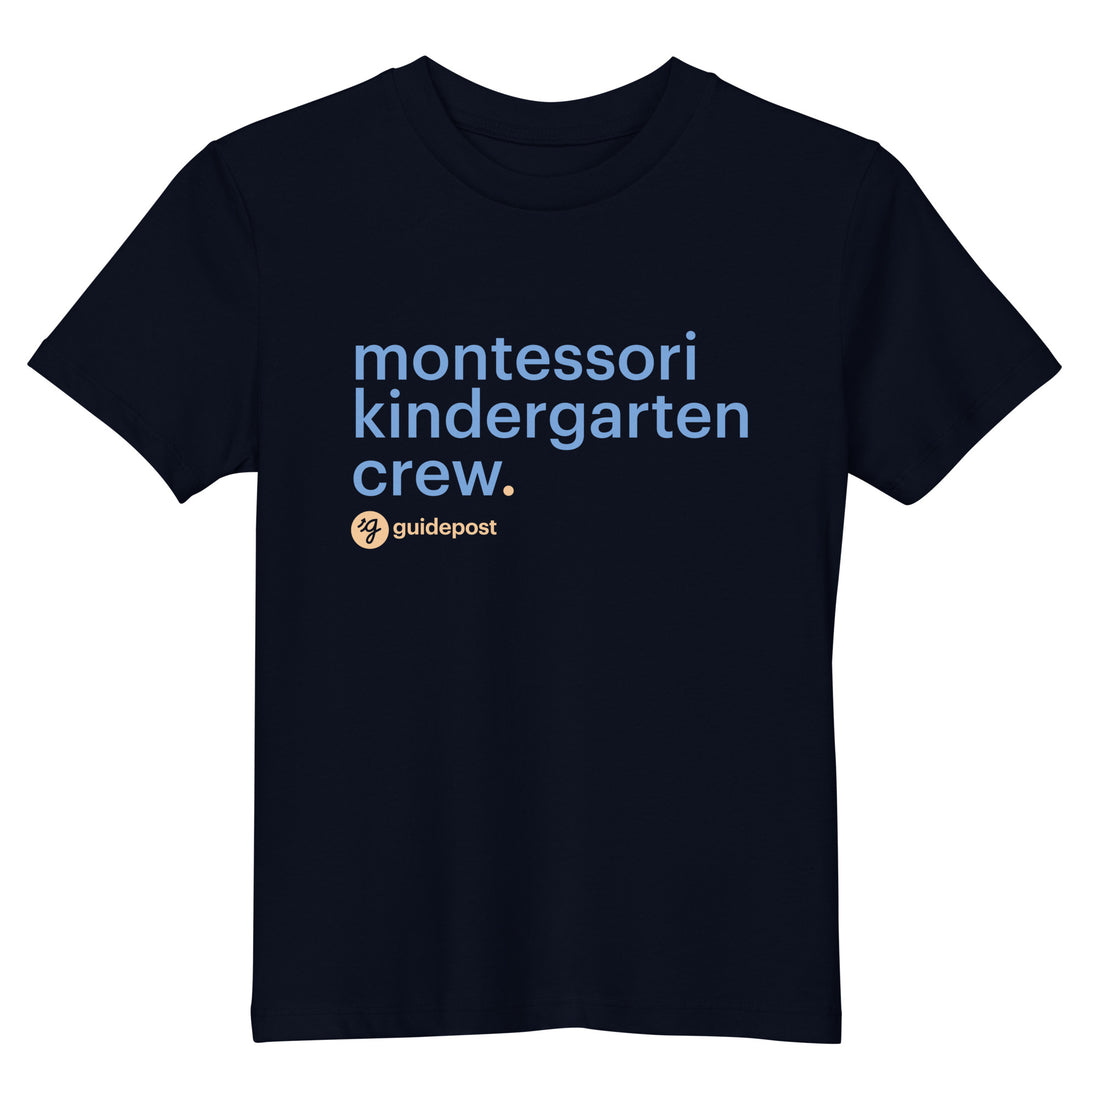 Montessori Kindergarten Crew Organic cotton kids t-shirt